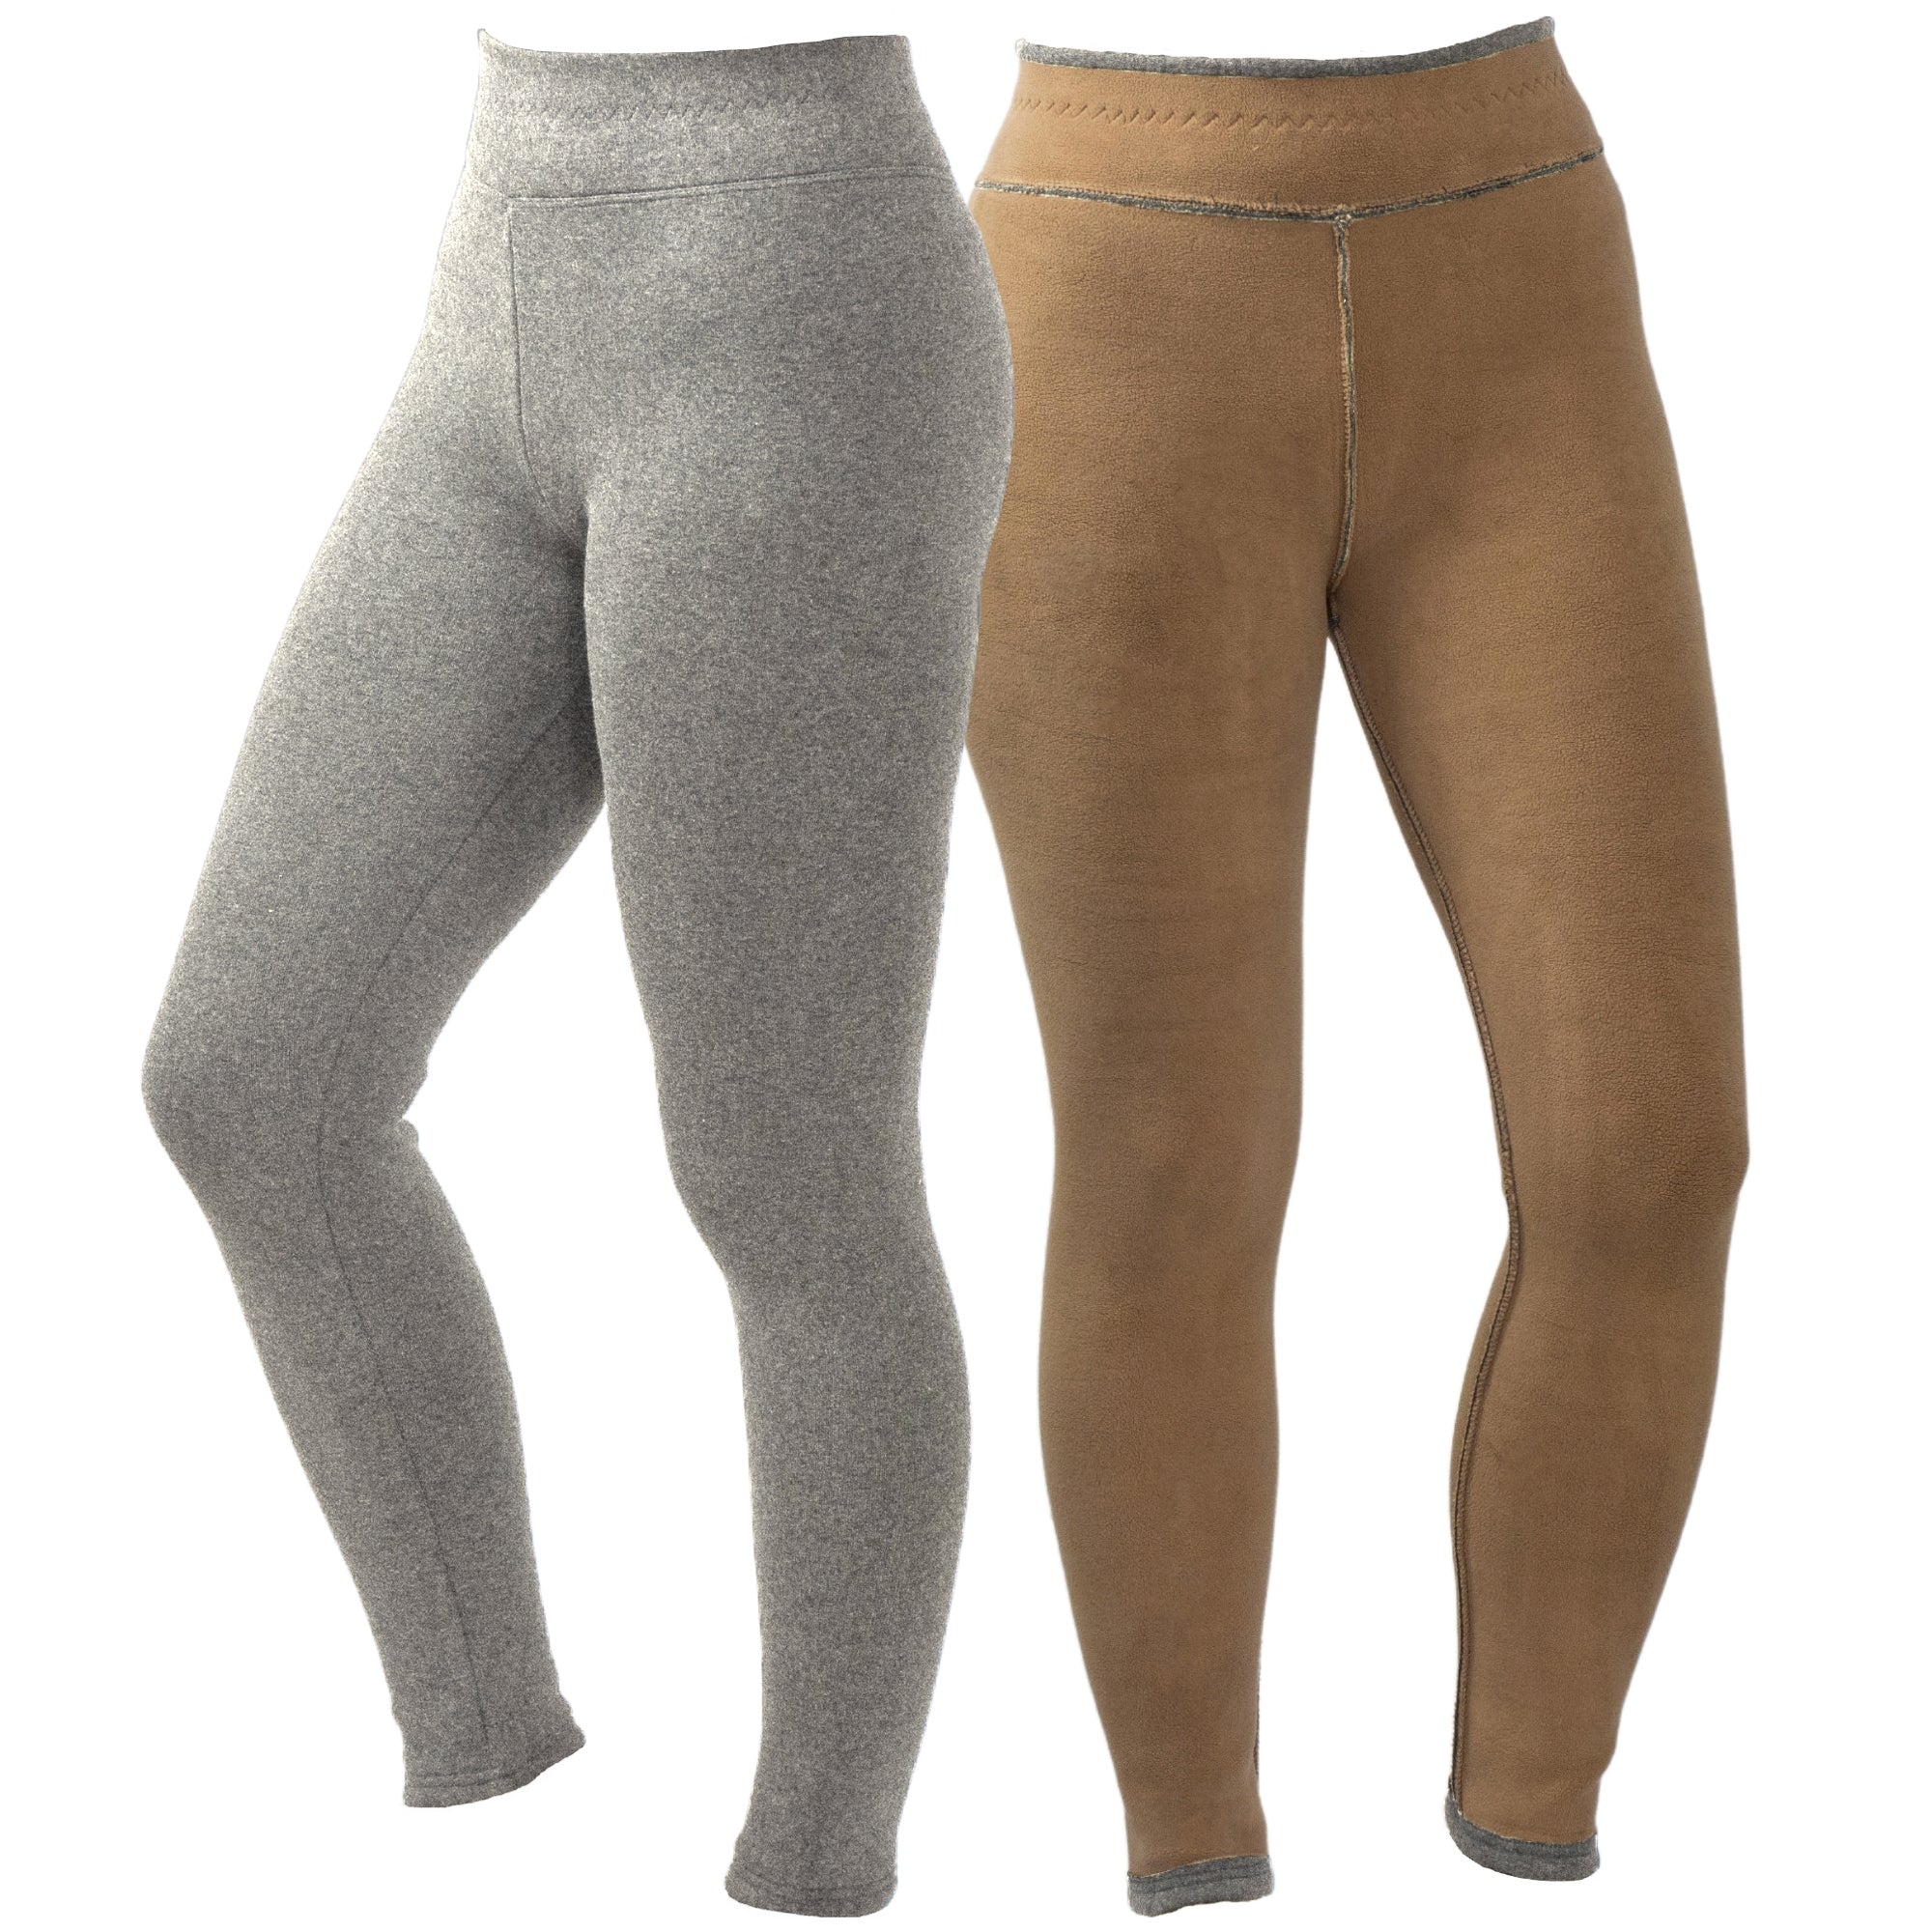 Shop Ladies Fur Lined Thermal Leggings Womens Warm Winter Pants